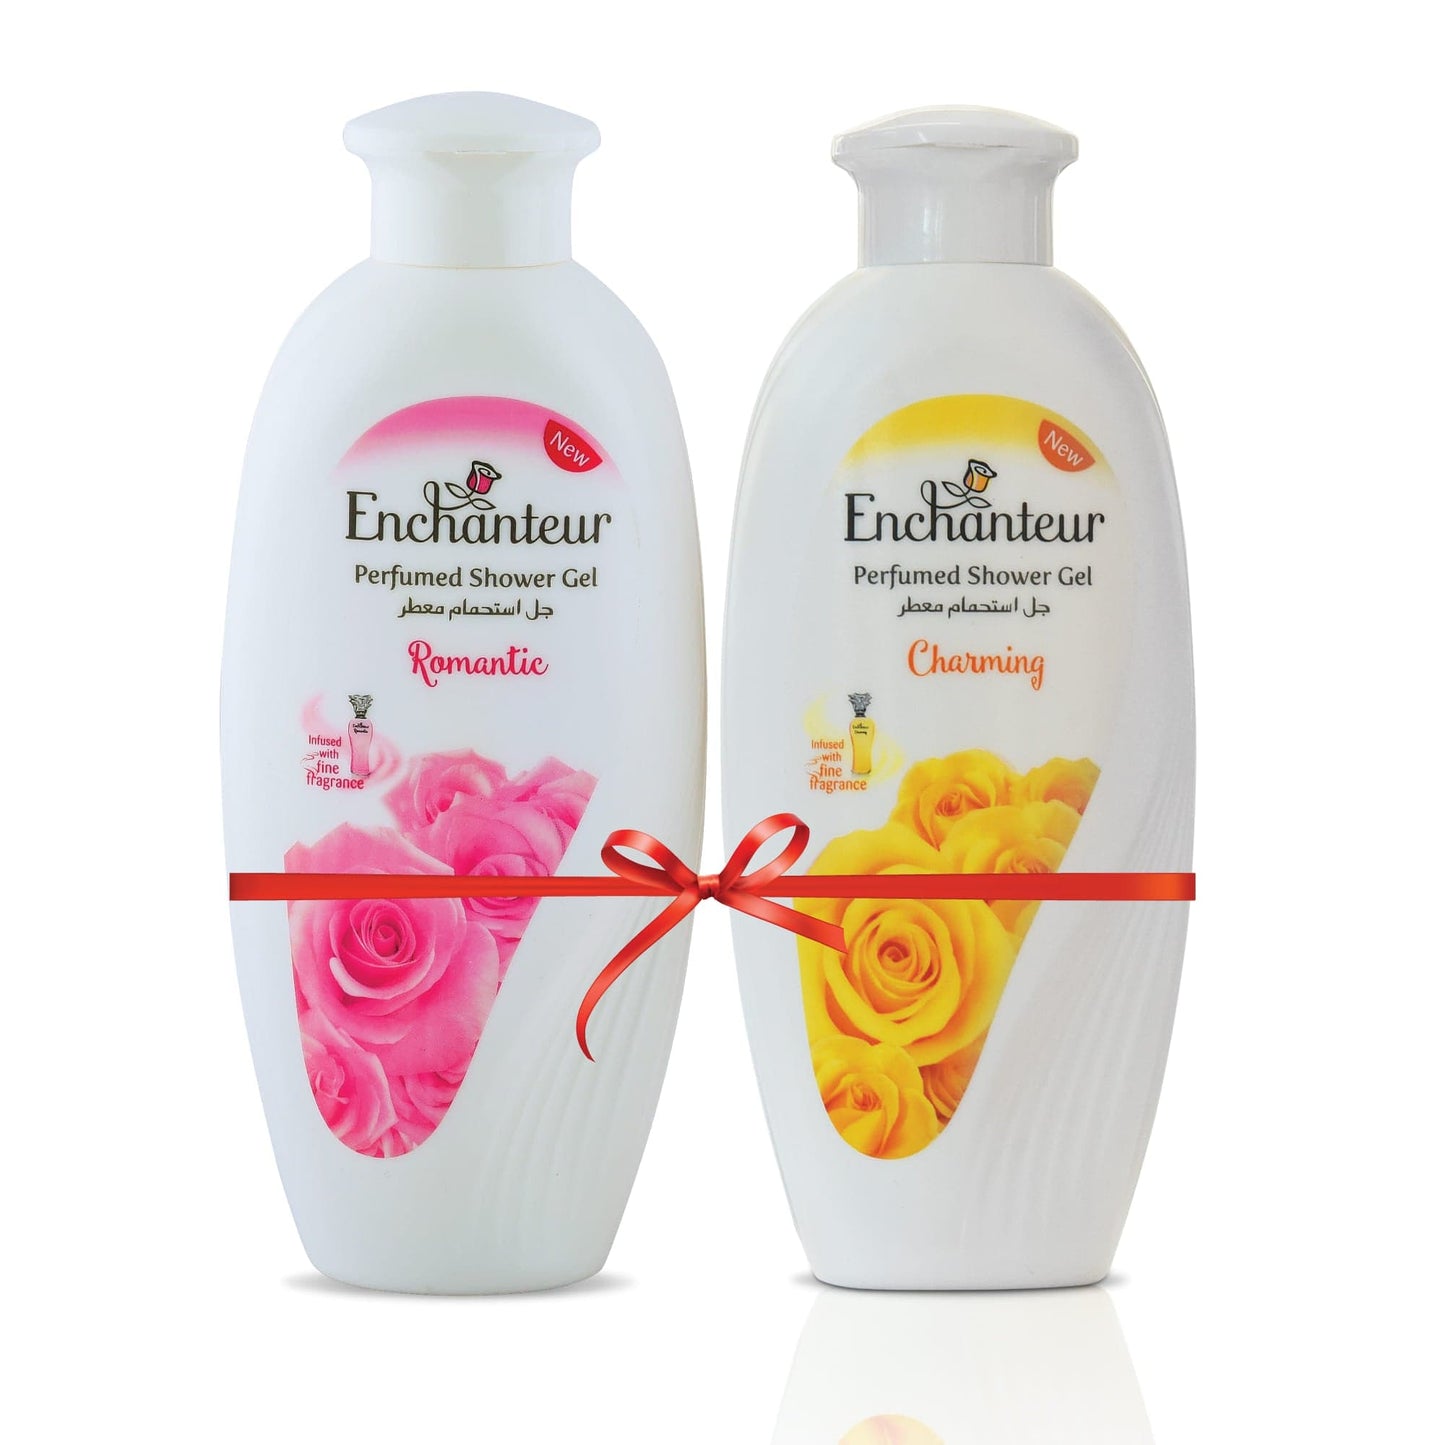 Enchanteur Romantic and Charming Shower gel, 250ml each